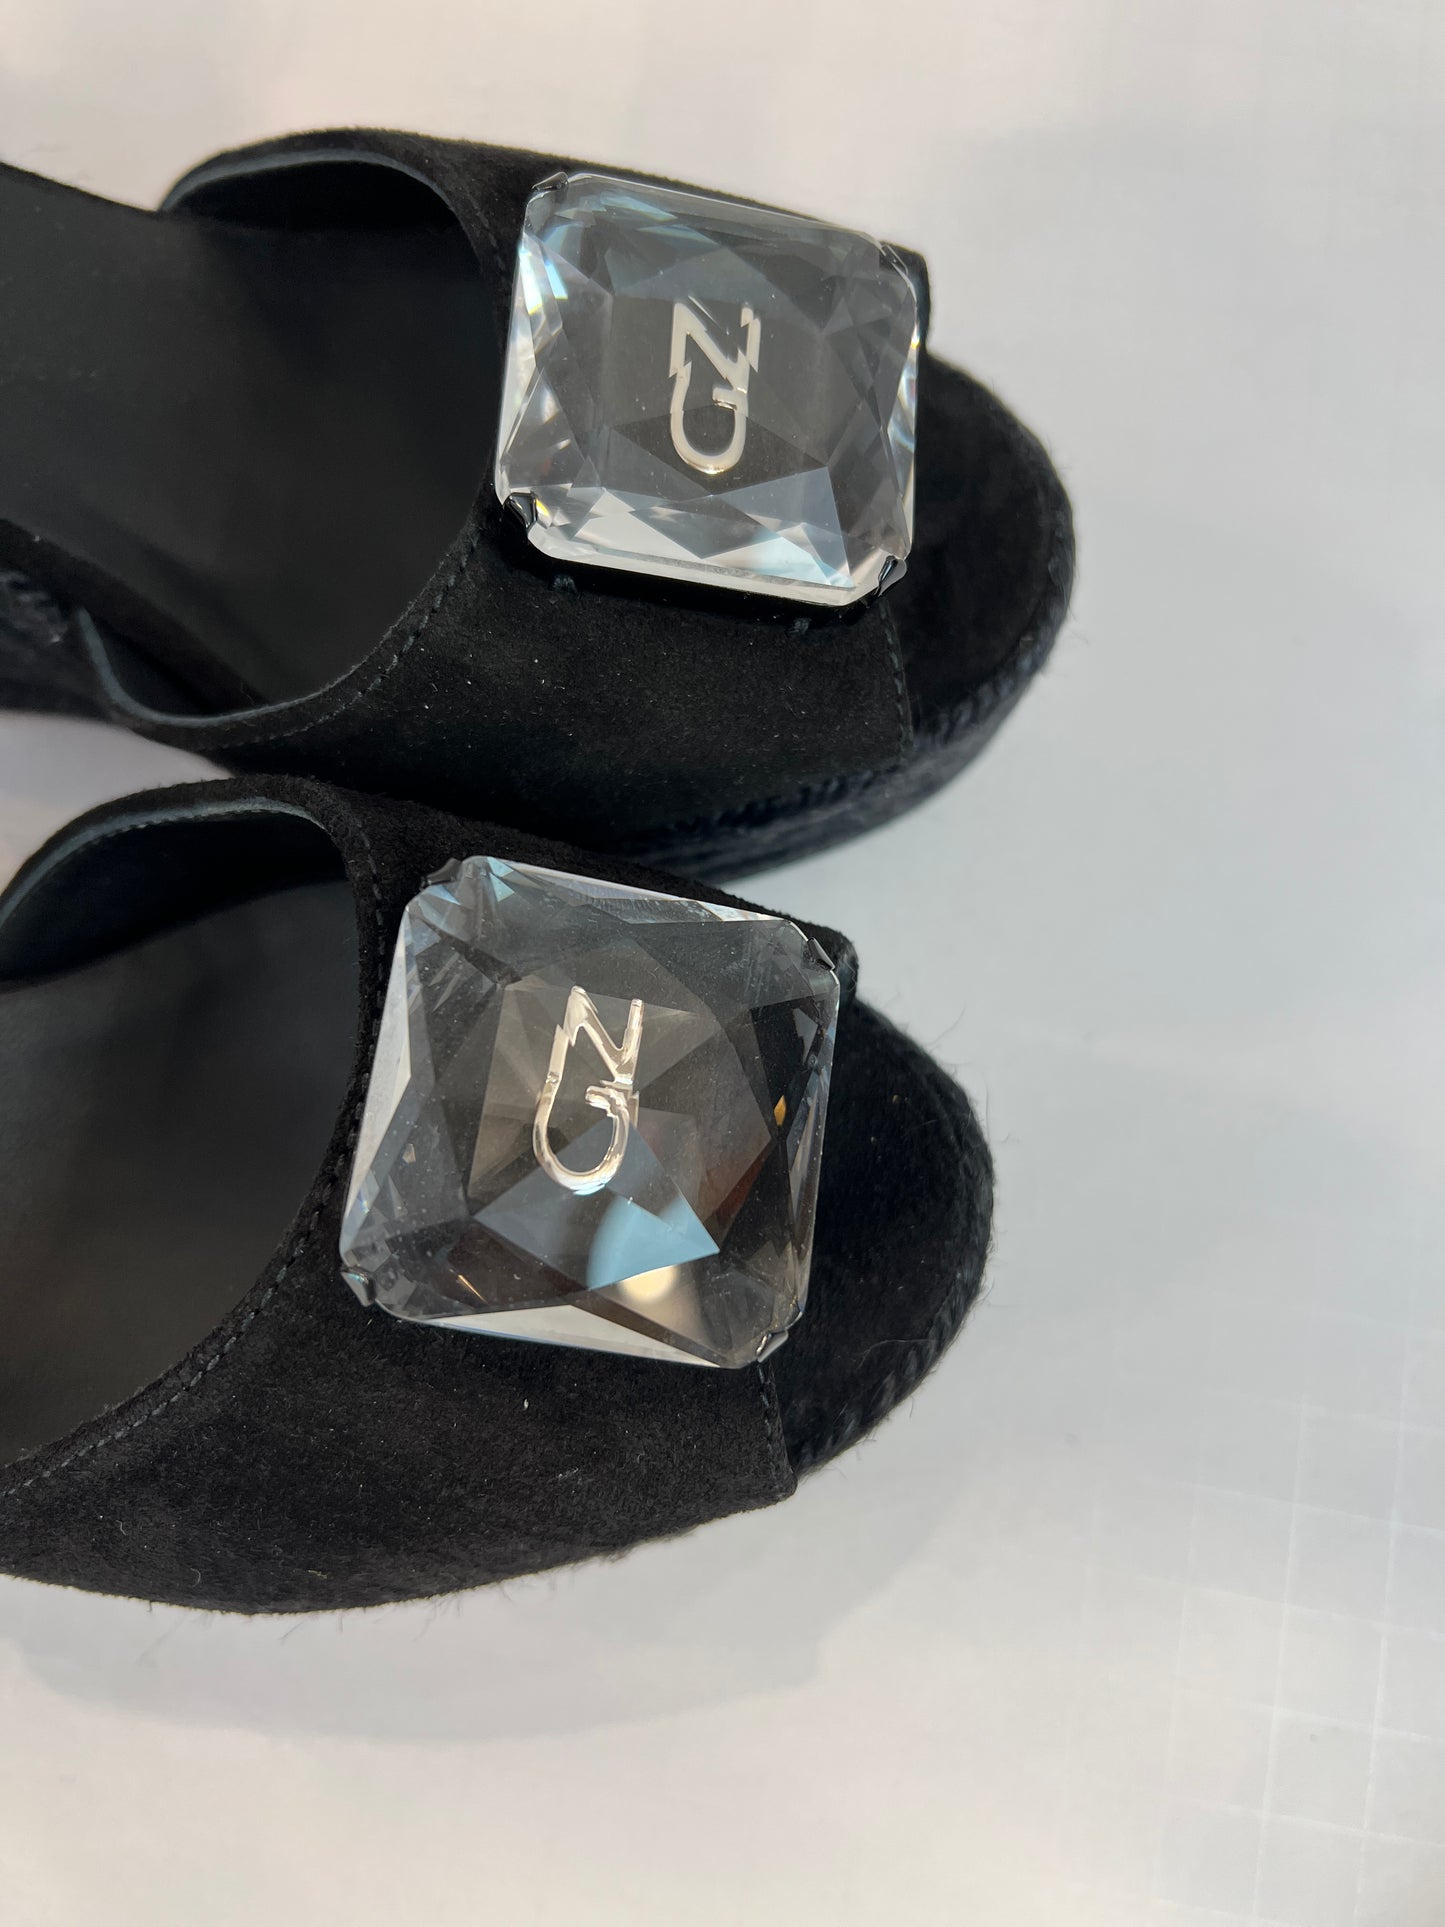 GIUSEPPE ZANOTI Aina Crystal Platform Sandals NWT/ 39-9